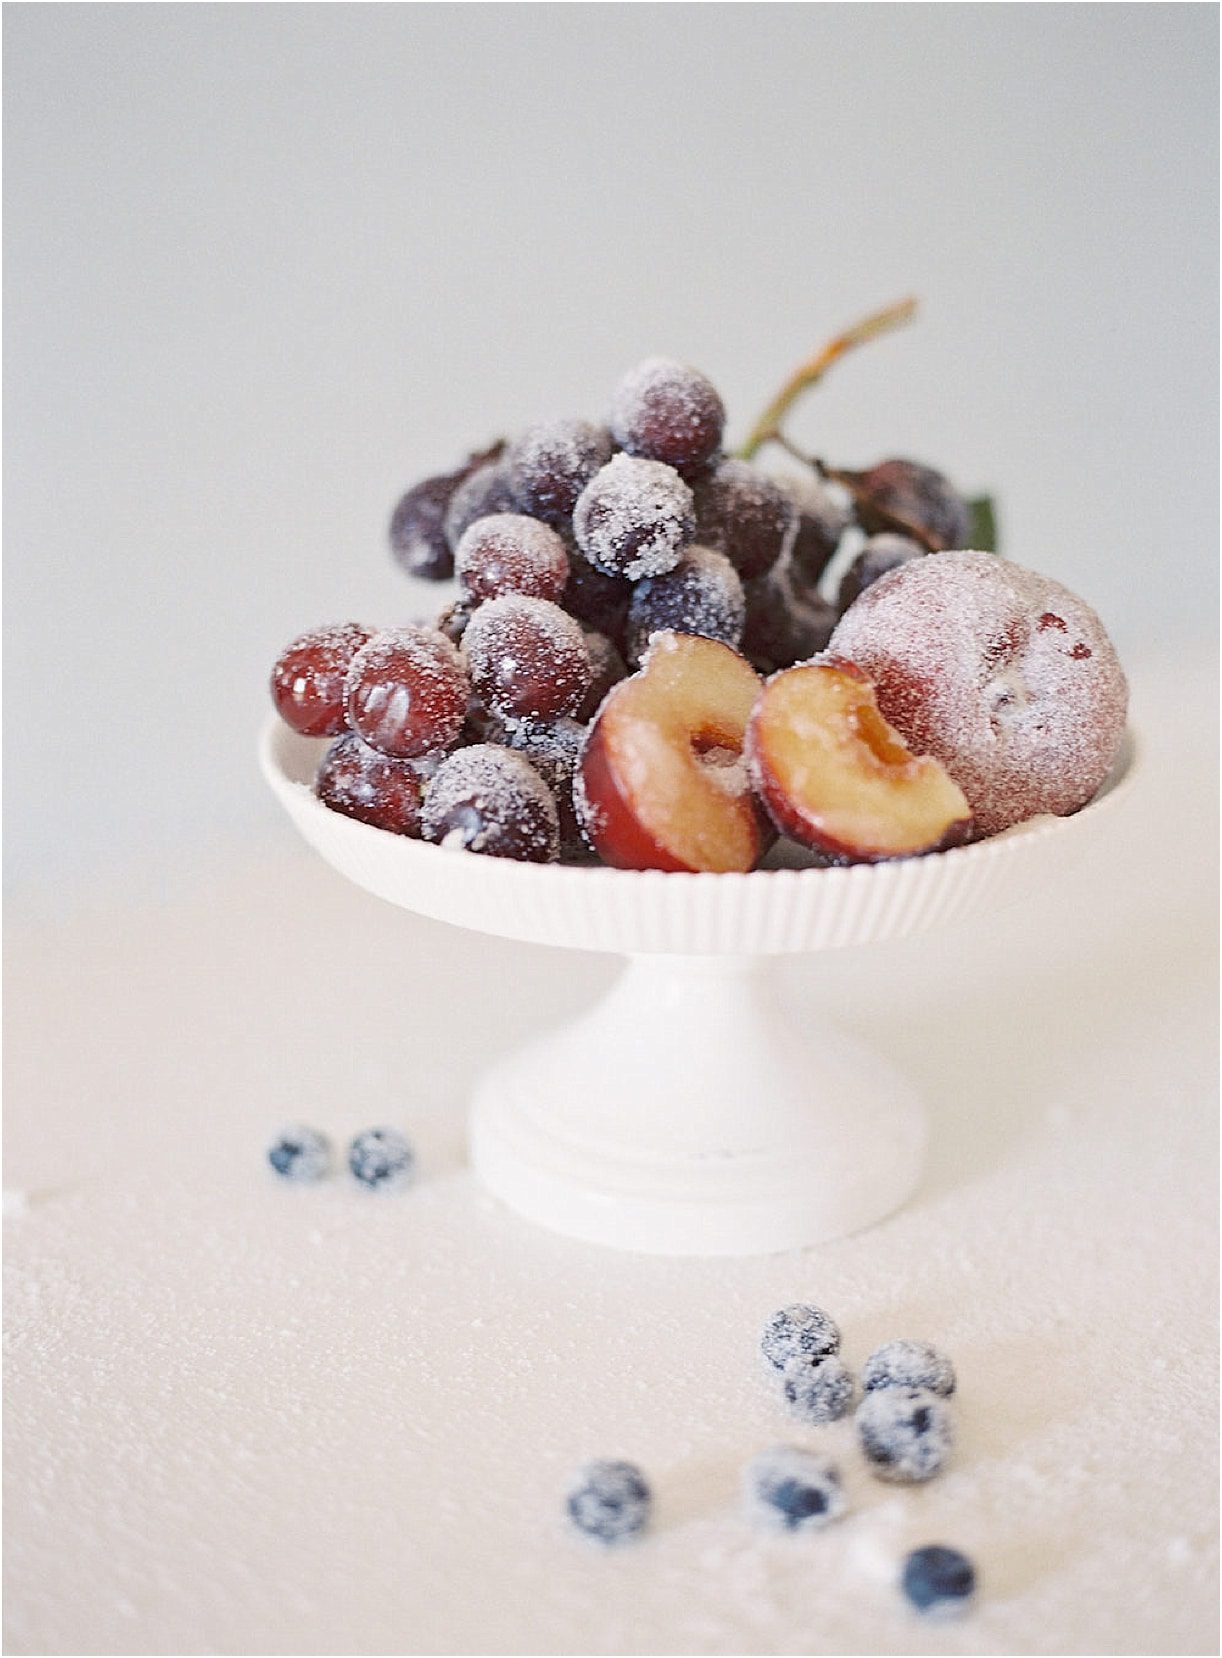 Winter Wedding Centerpiece Ideas | Hill City Bride Virginia Weddings Blog | Sugared Fruit